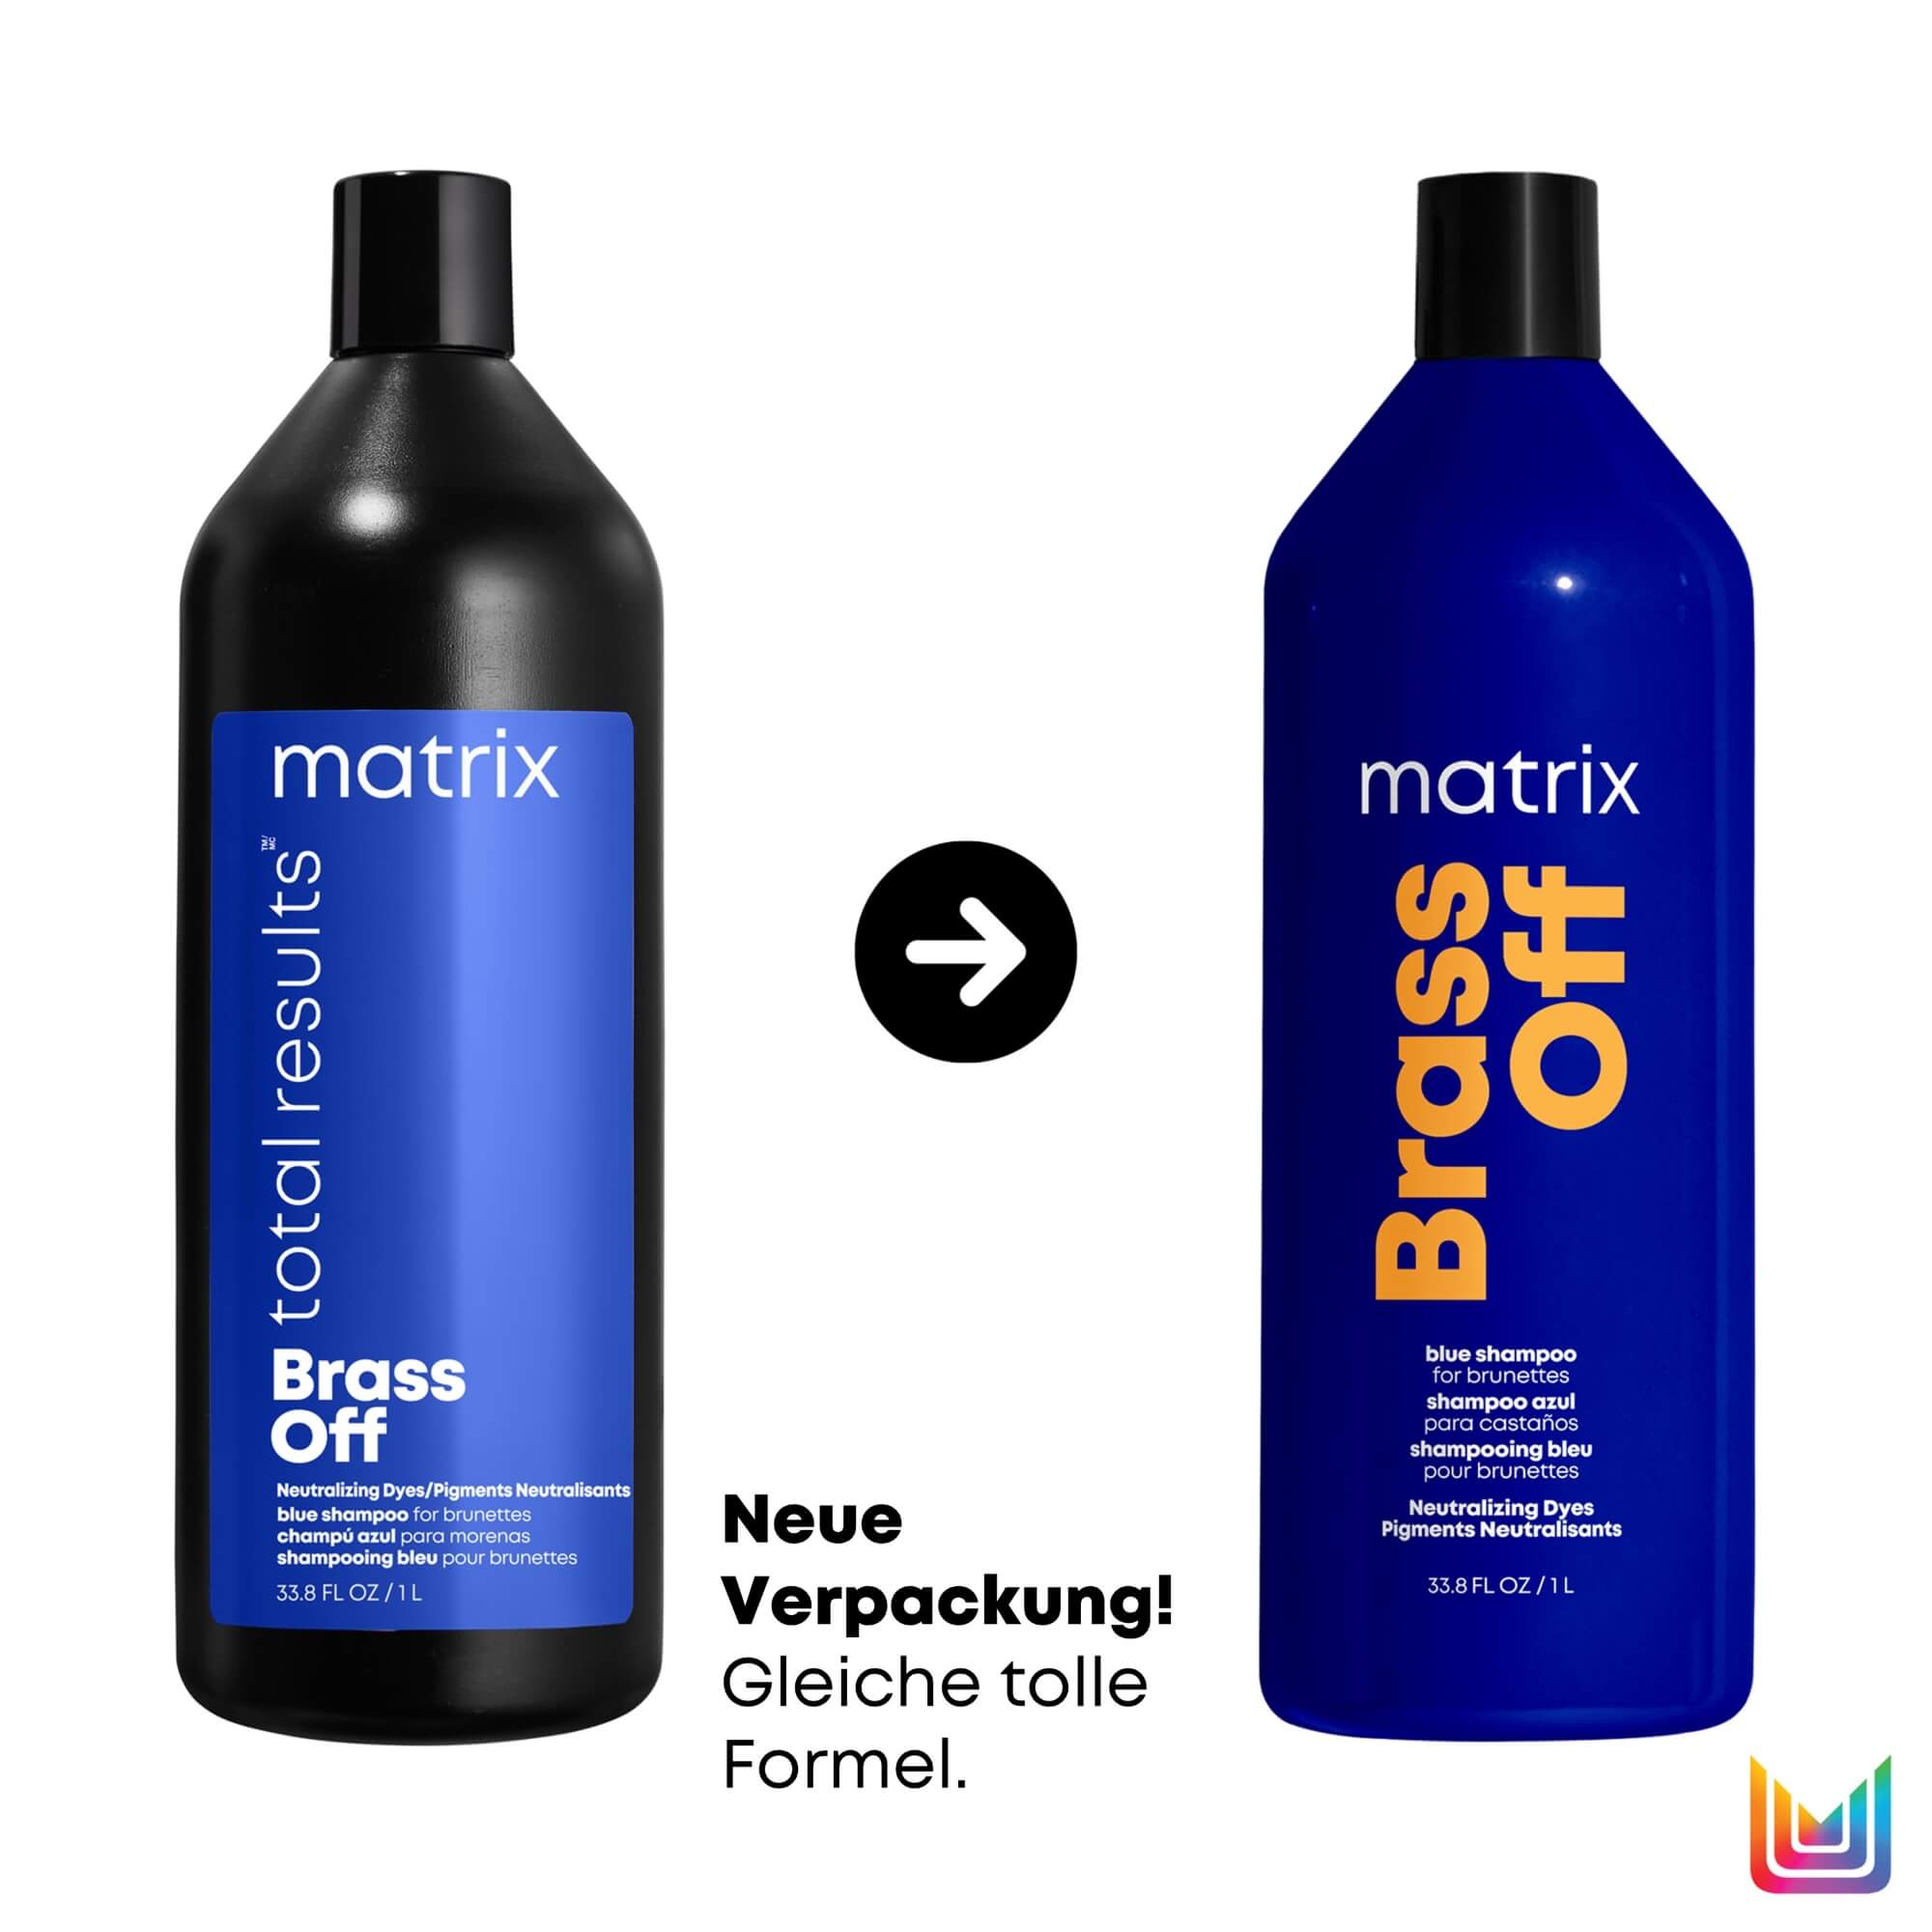 Matrix Brass off Shampoo 